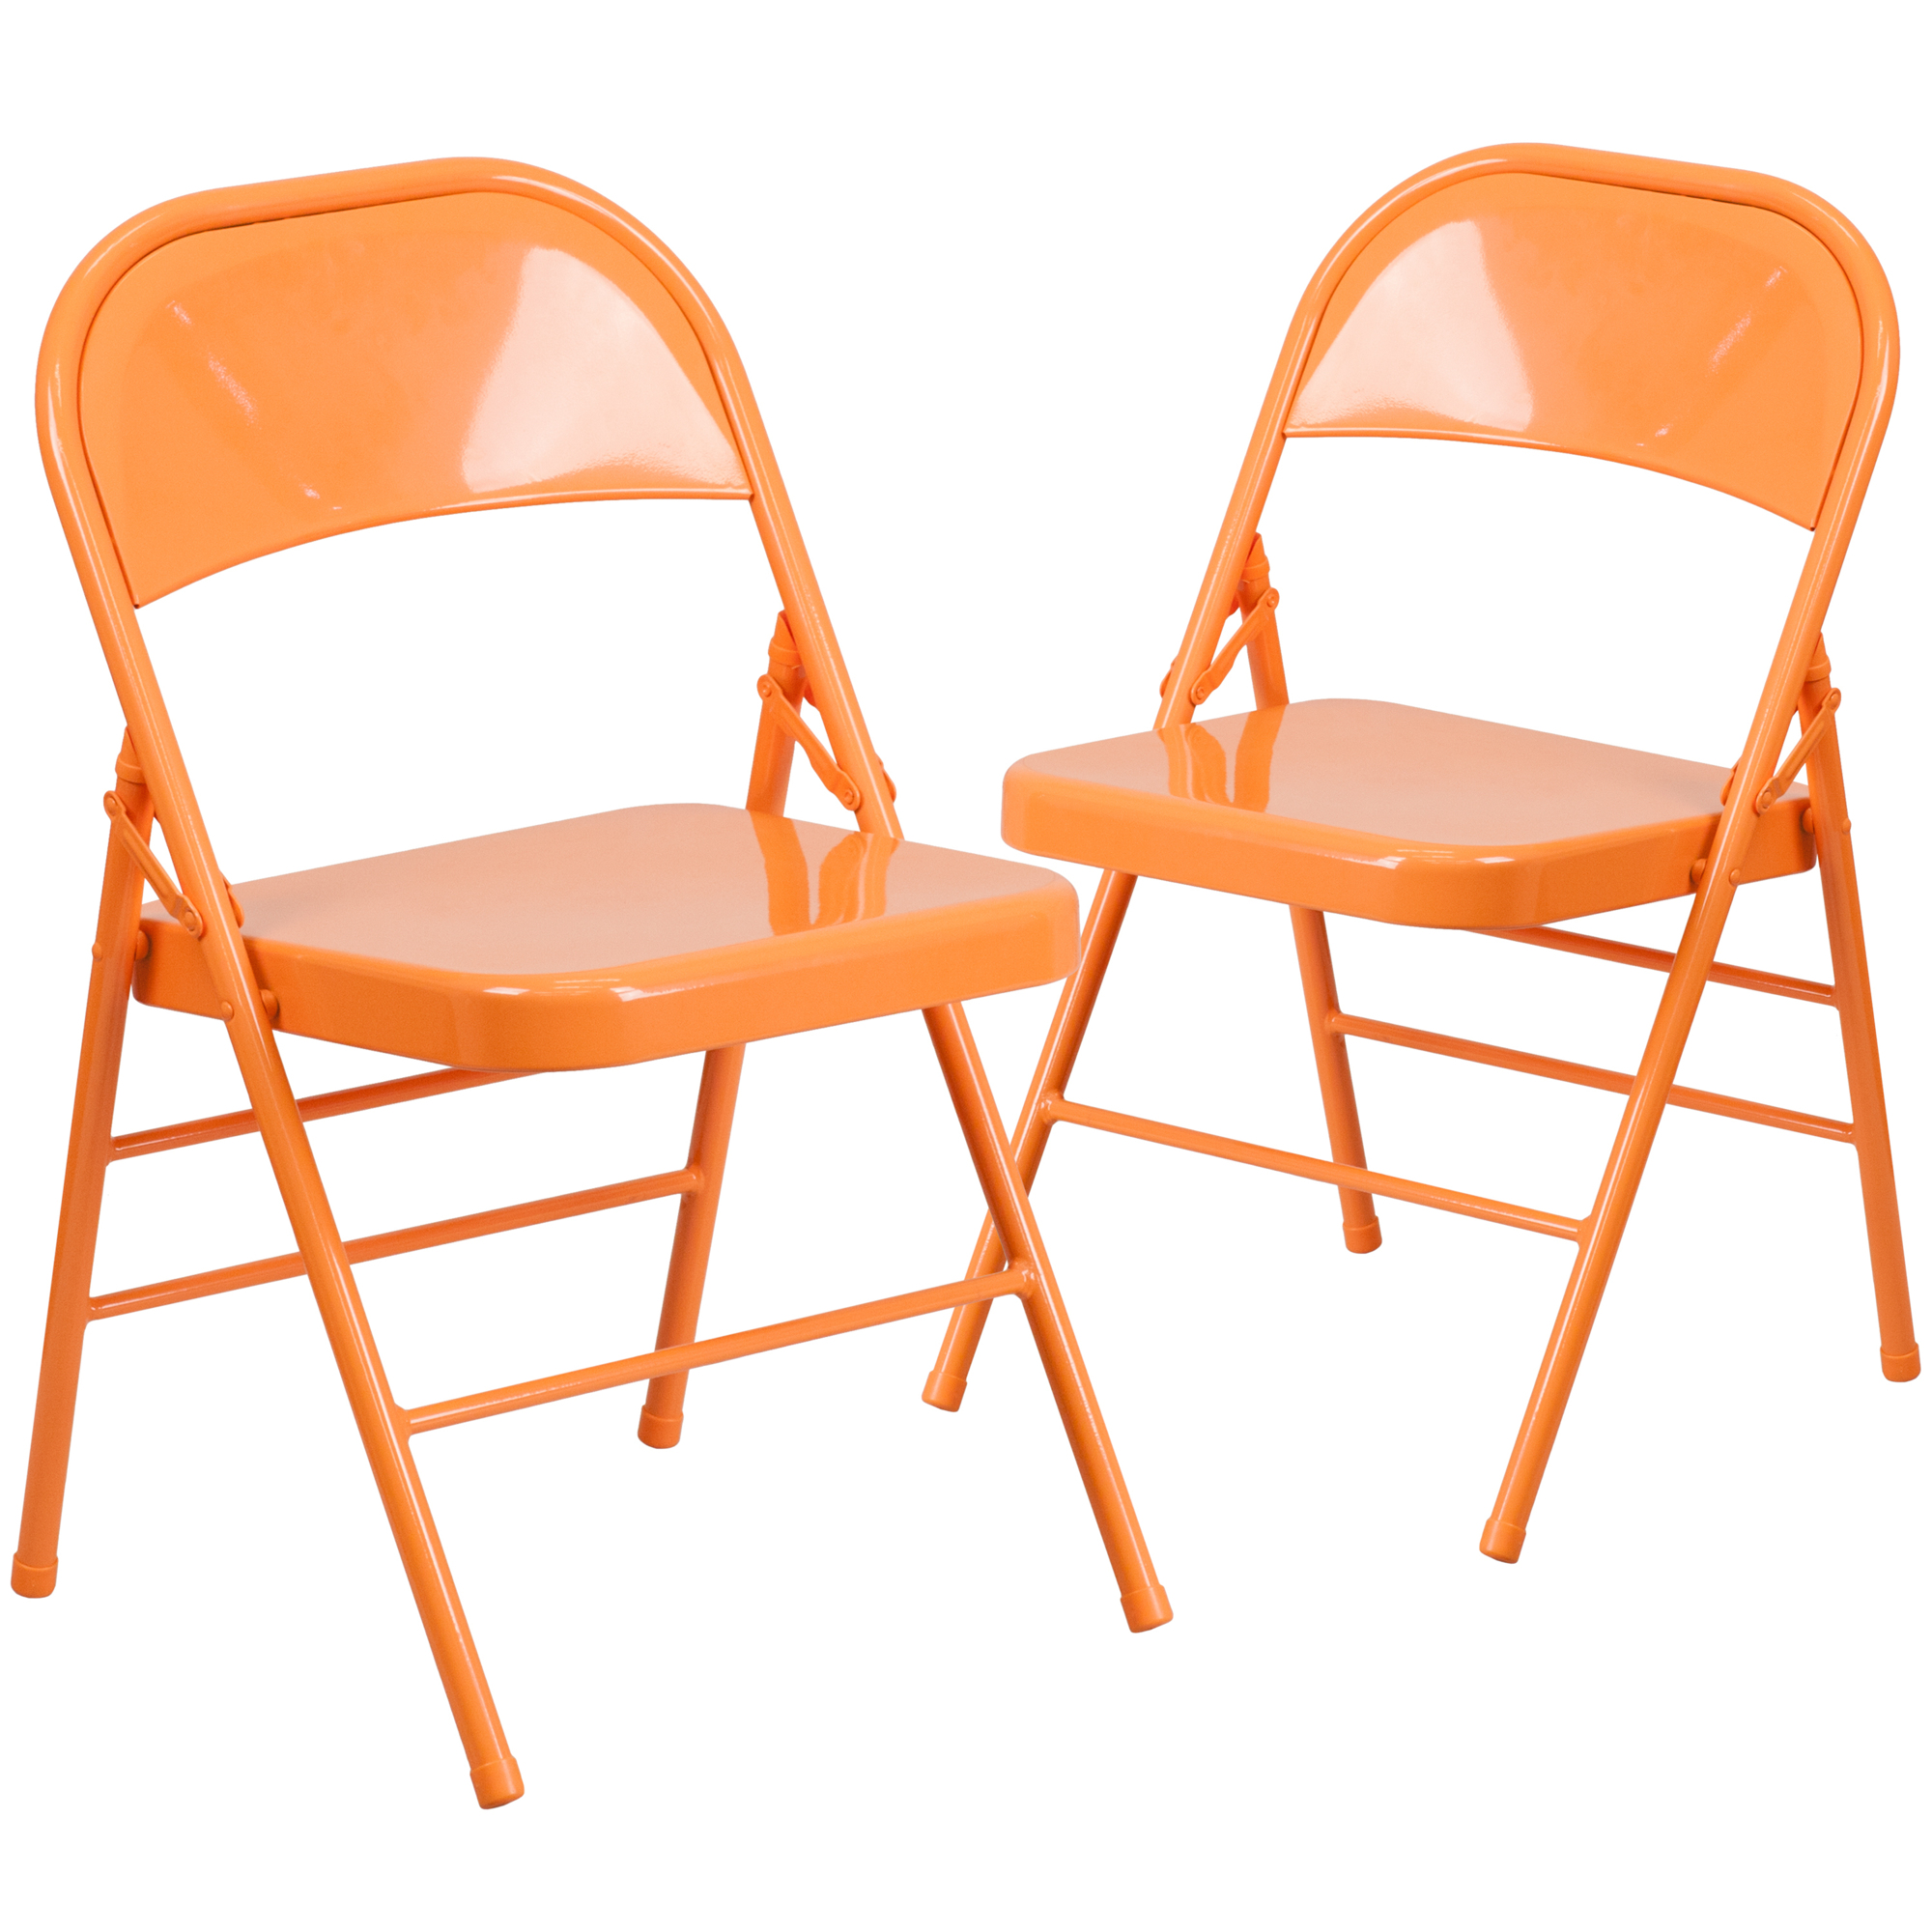 Flash Furniture, Orange Marmalade Triple Braced Metal Folding Chair, Primary Color Orange, Included (qty.) 2, Model 2HF3ORANGE